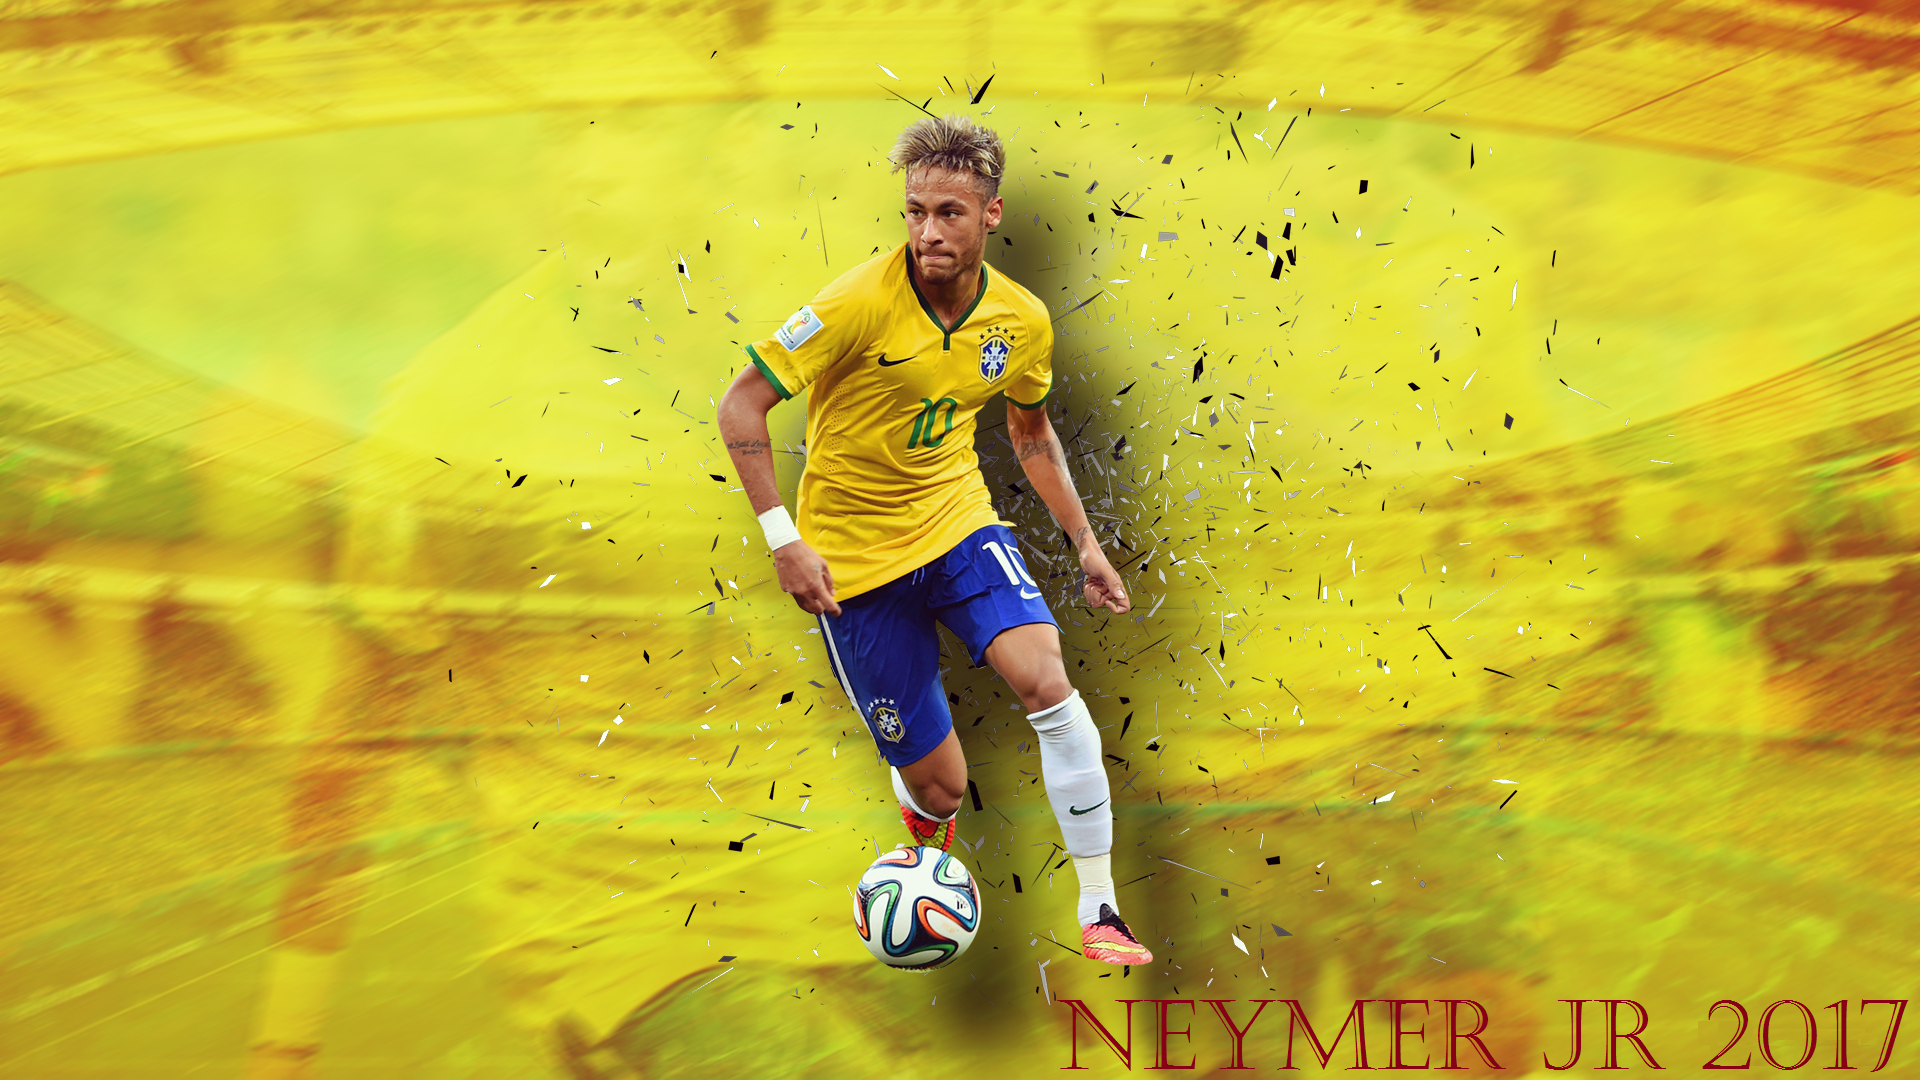 Cute Neymar Football Soccer Player Hd Free Play With Ball Mobile Bakground Desktop Pics